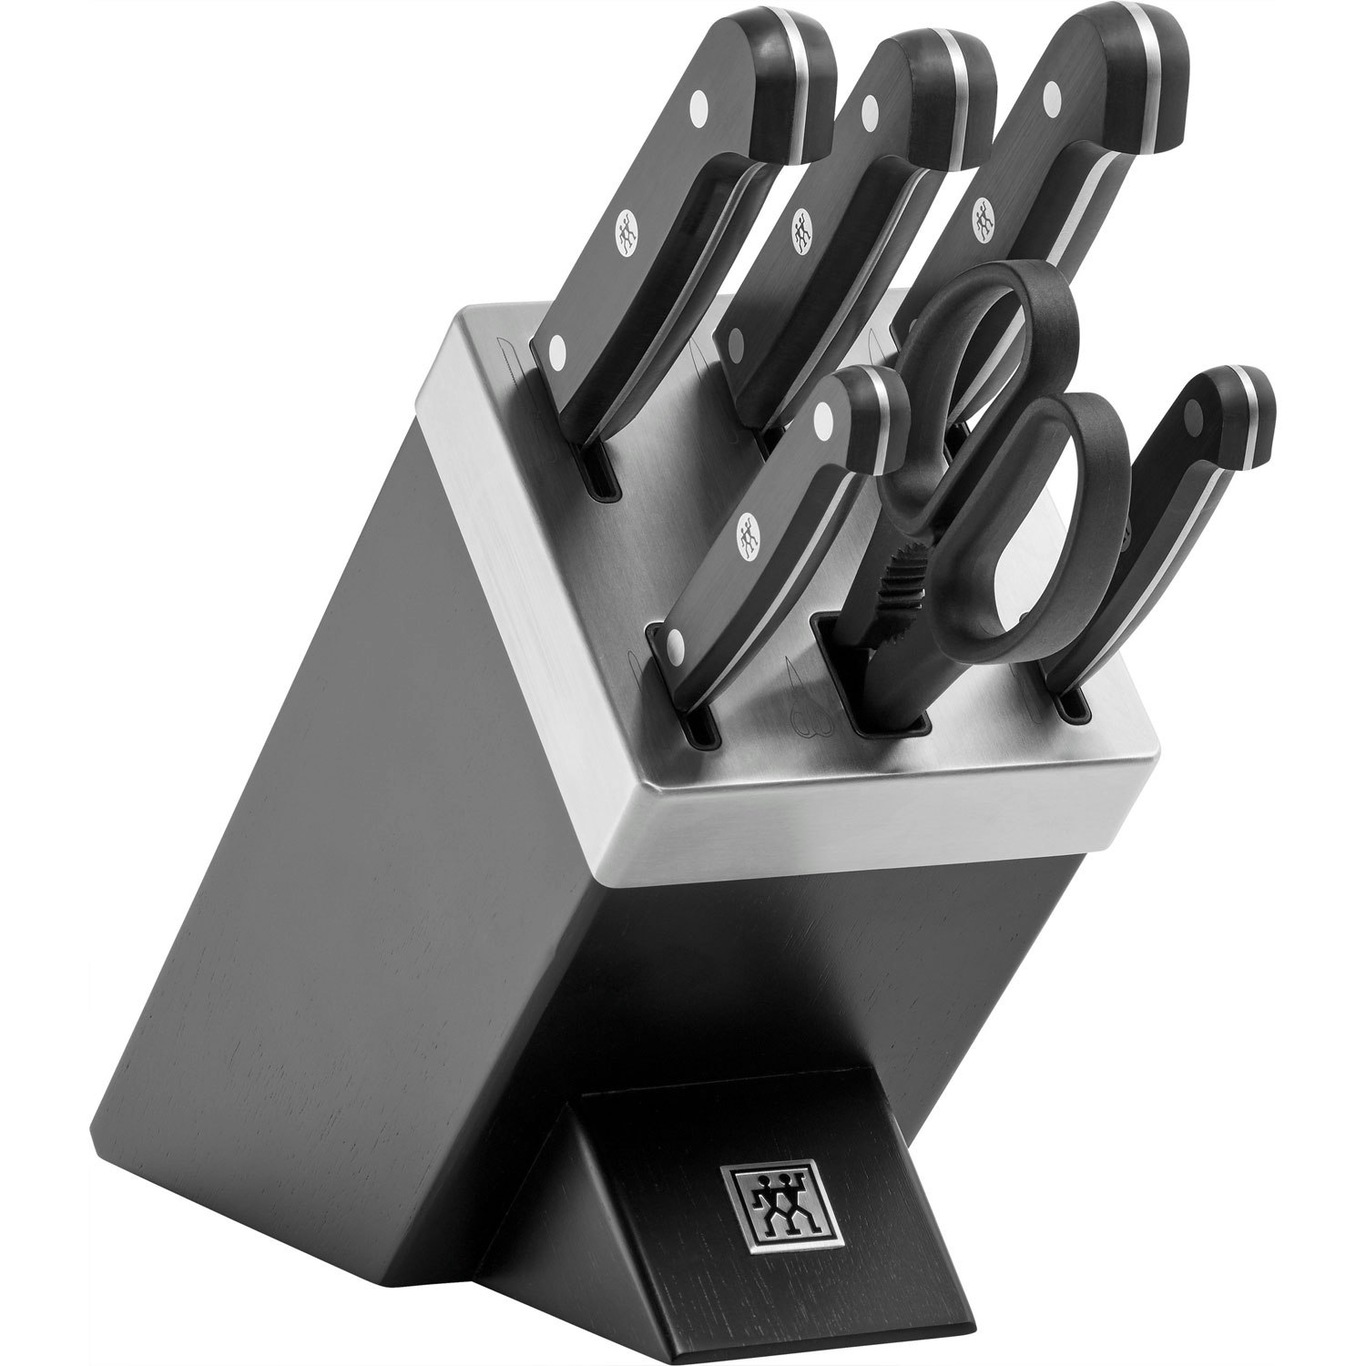 https://royaldesign.com/image/2/zwilling-gourmet-knife-block-self-sharpening-7-pieces-0?w=800&quality=80